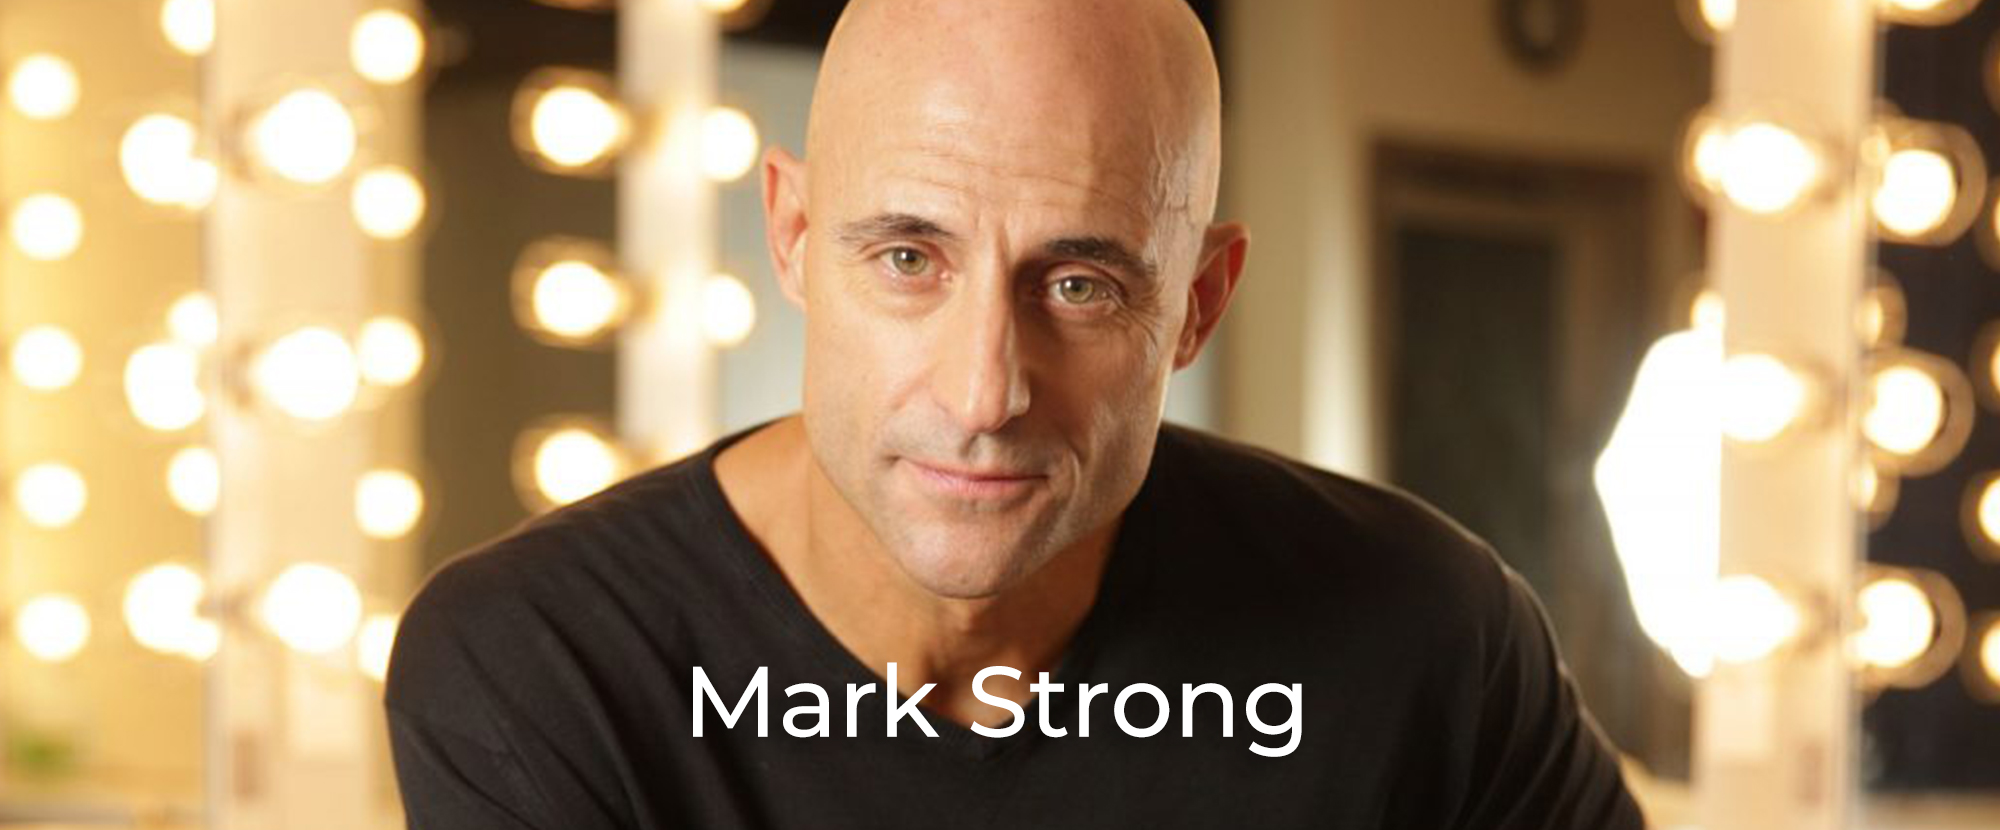 Mark-Strong-Smiling-Header